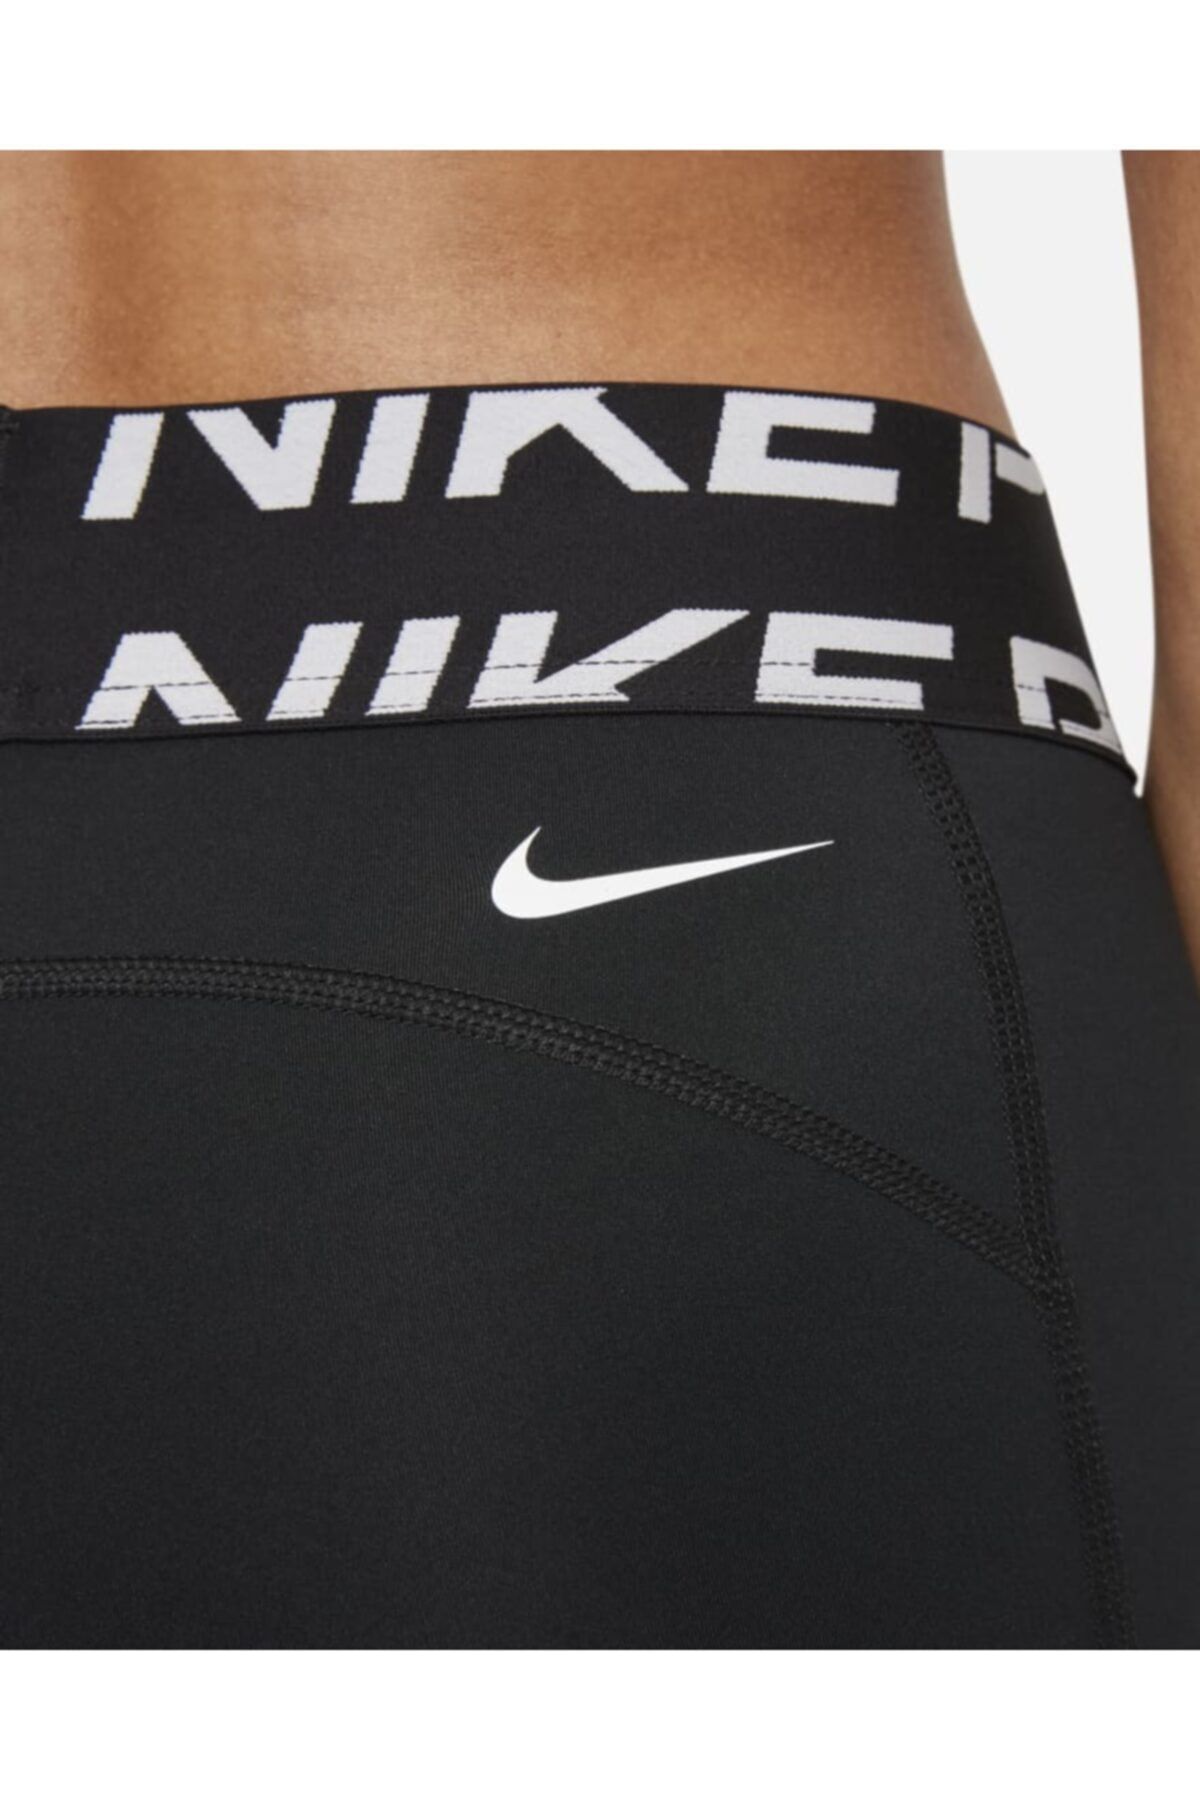 Nike Sports Leggings - Black - High Waist - Trendyol